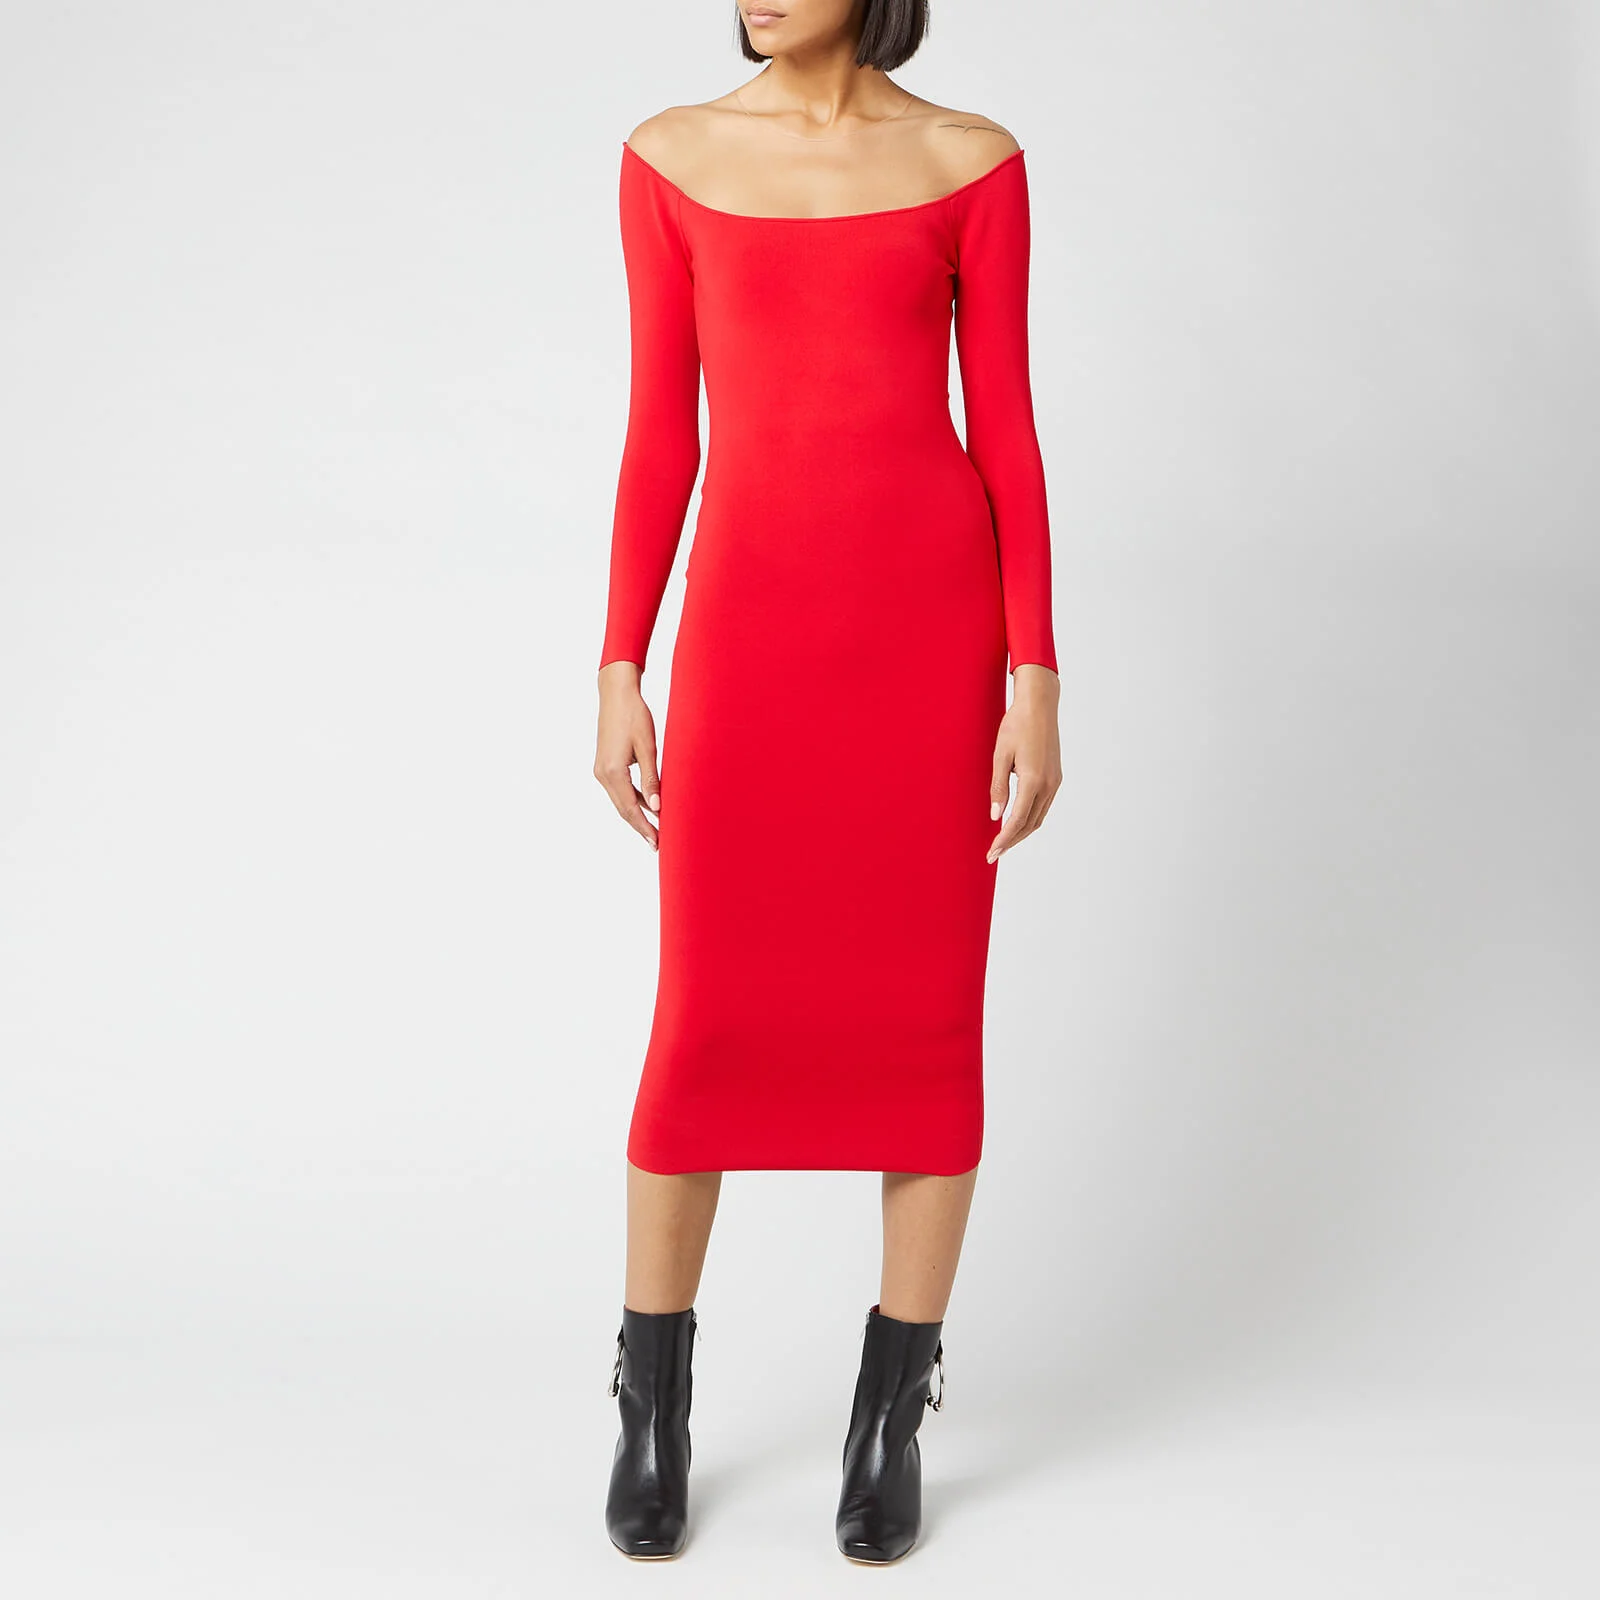 Alexander Wang Women's Long Sleeve Ankle Length Dress - Red Image 1